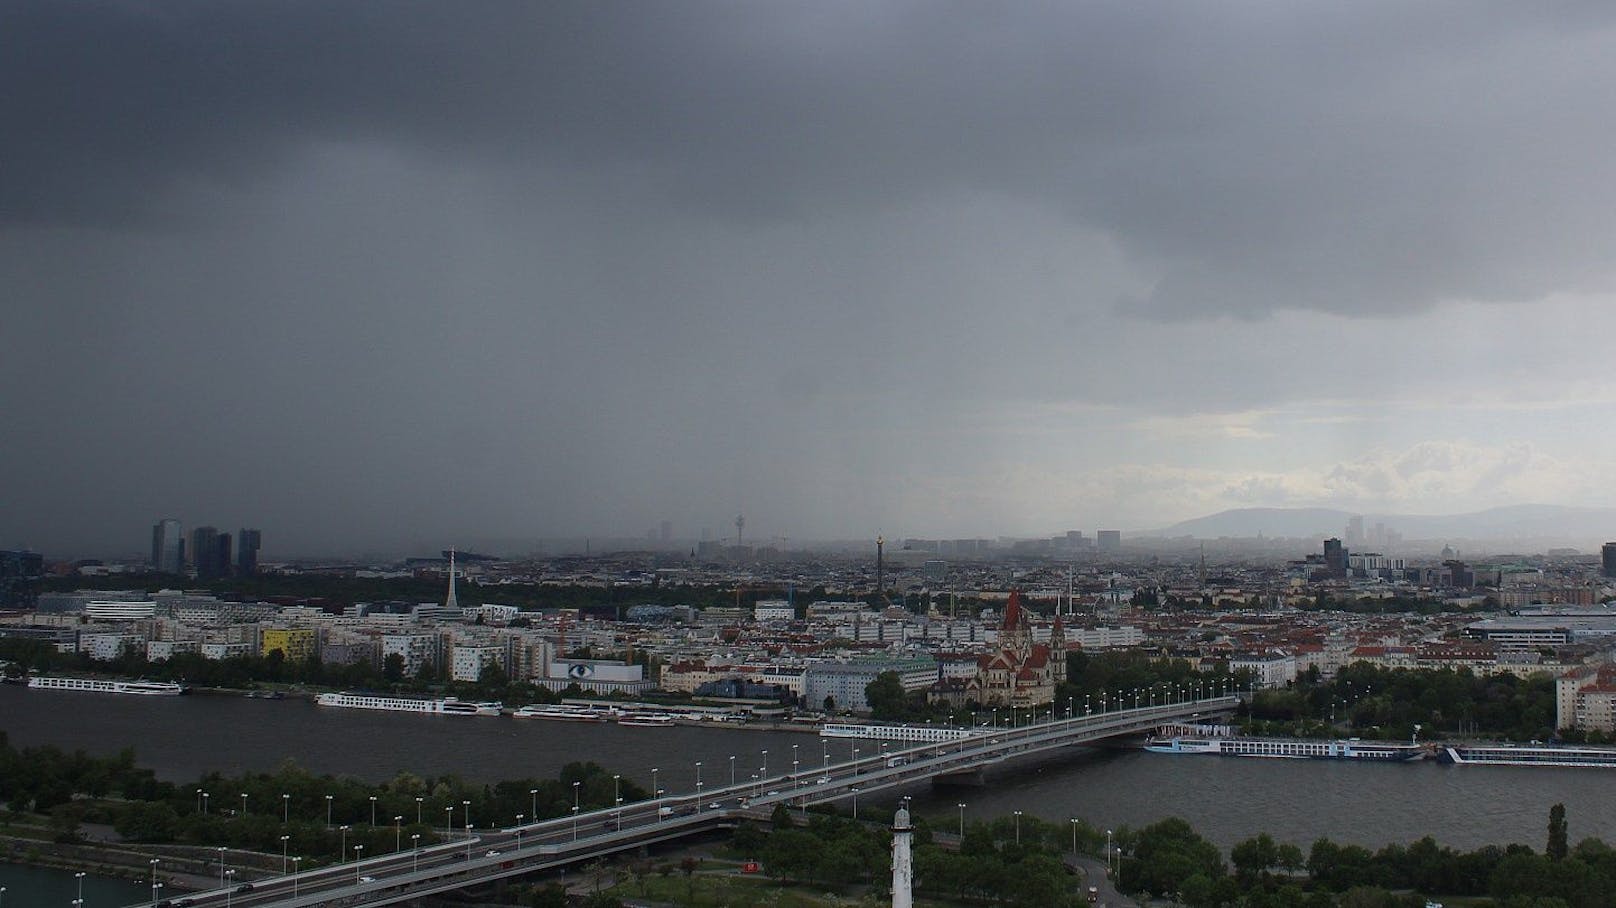 Bilder zeigen, wie Regen-Walze über Wien hinwegfegt